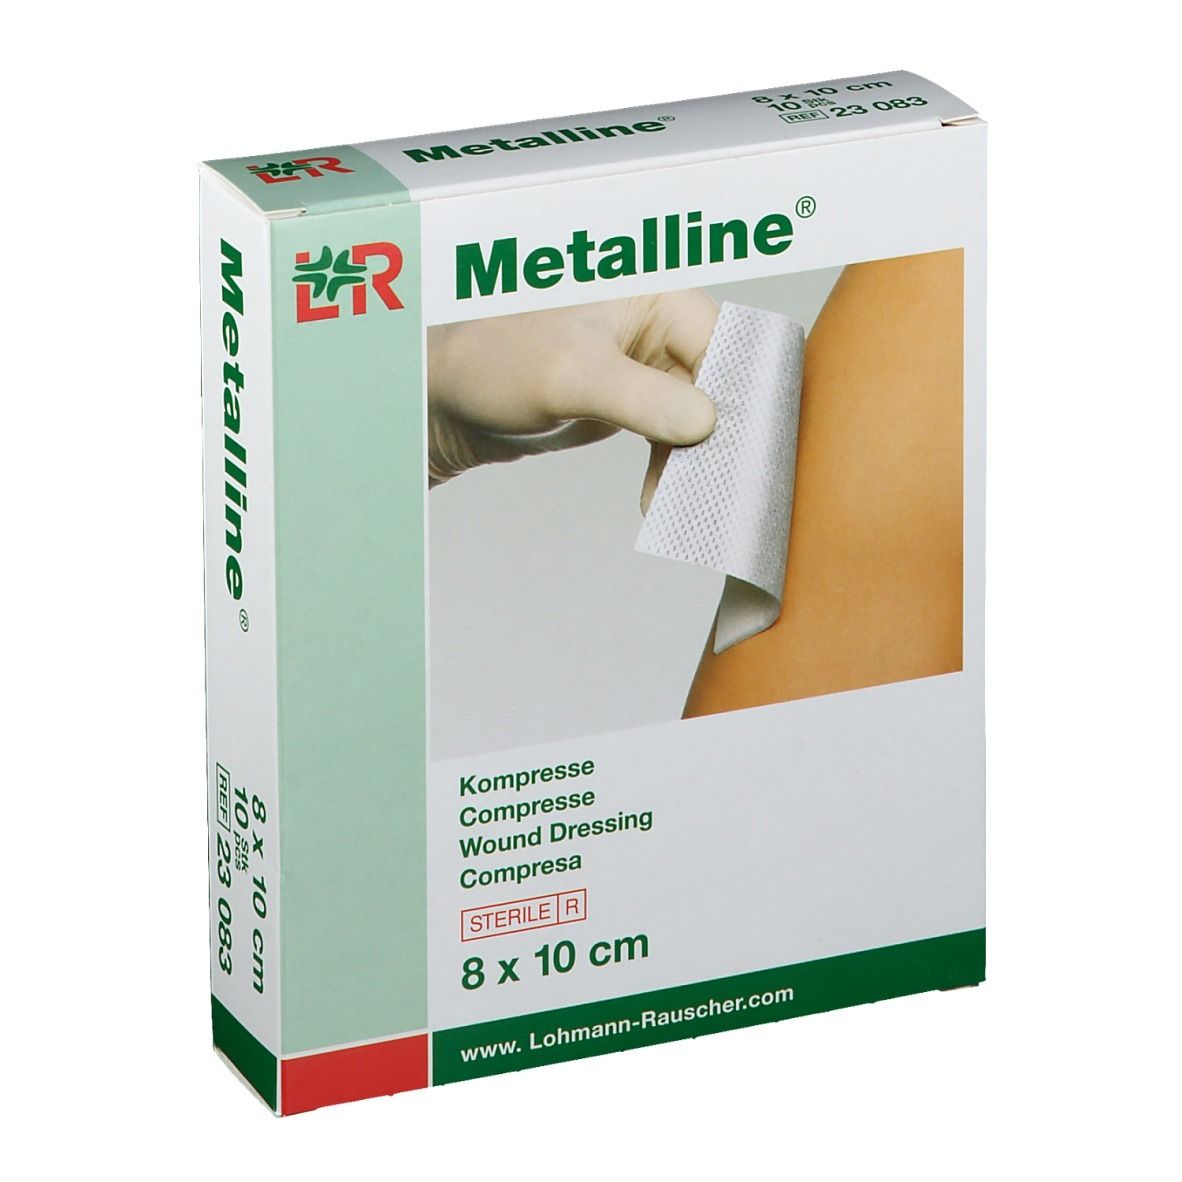 Metalline® Kompresse 8 cm x 10 cm steril